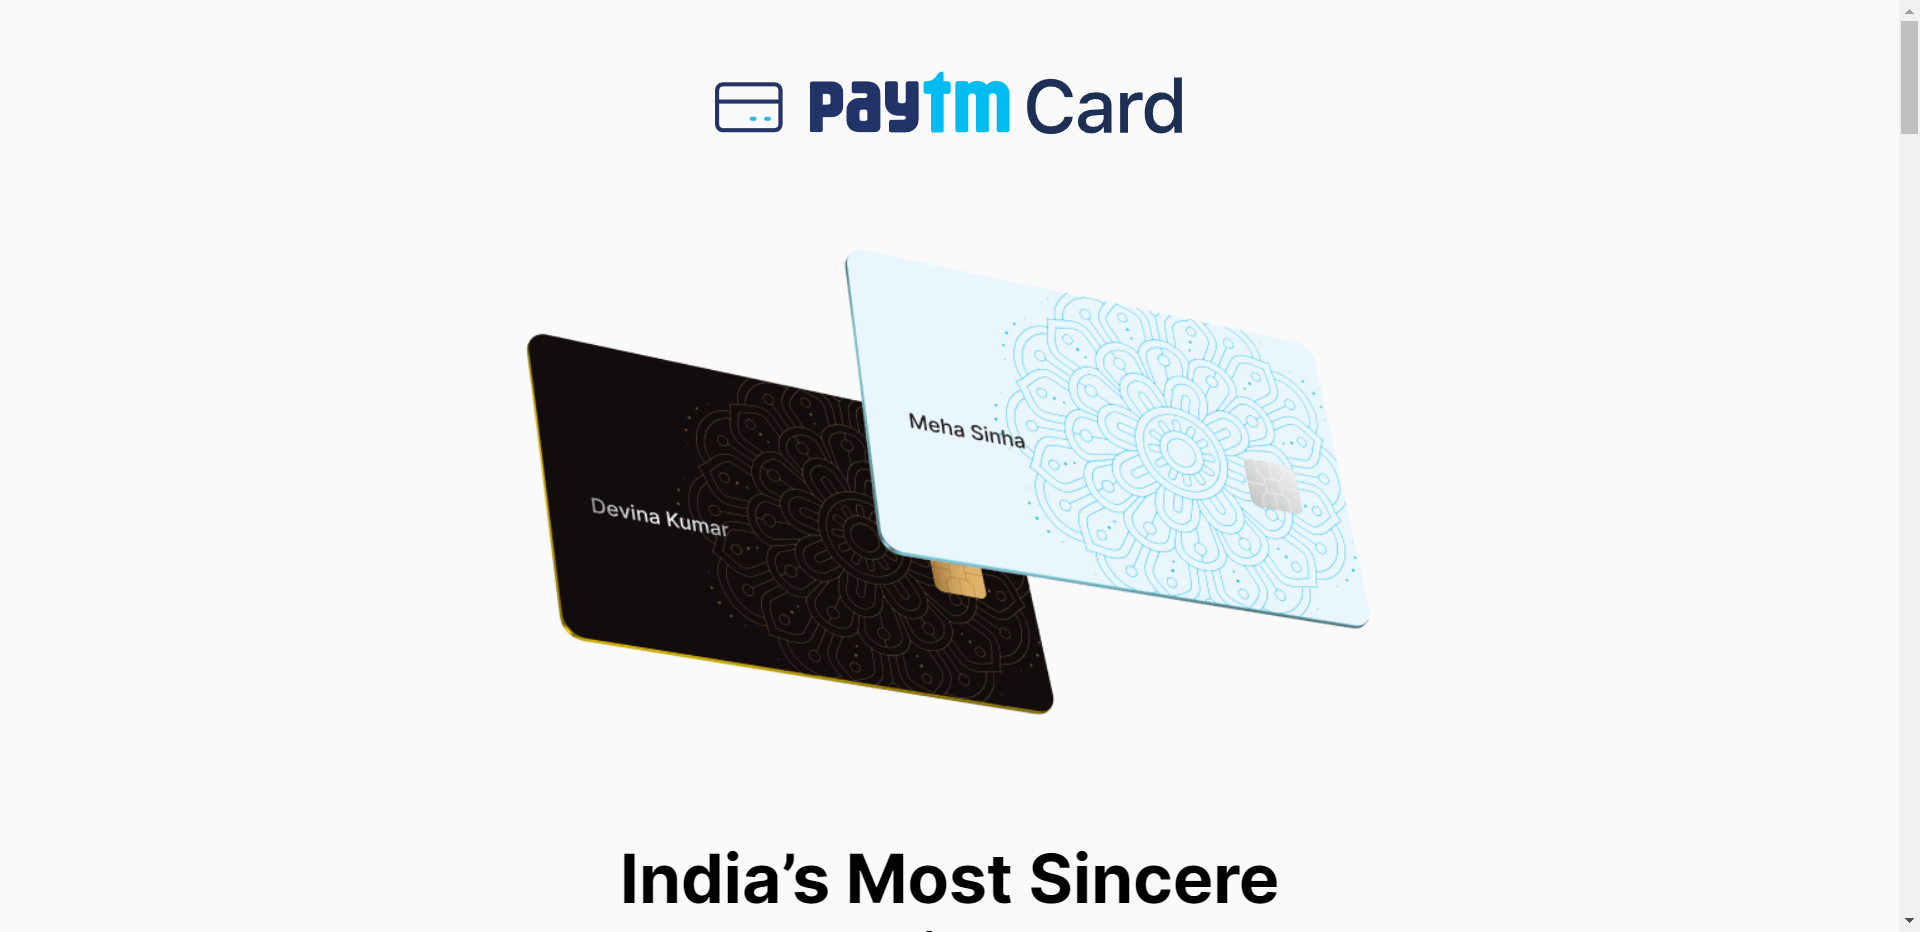 PayTm Credit Card